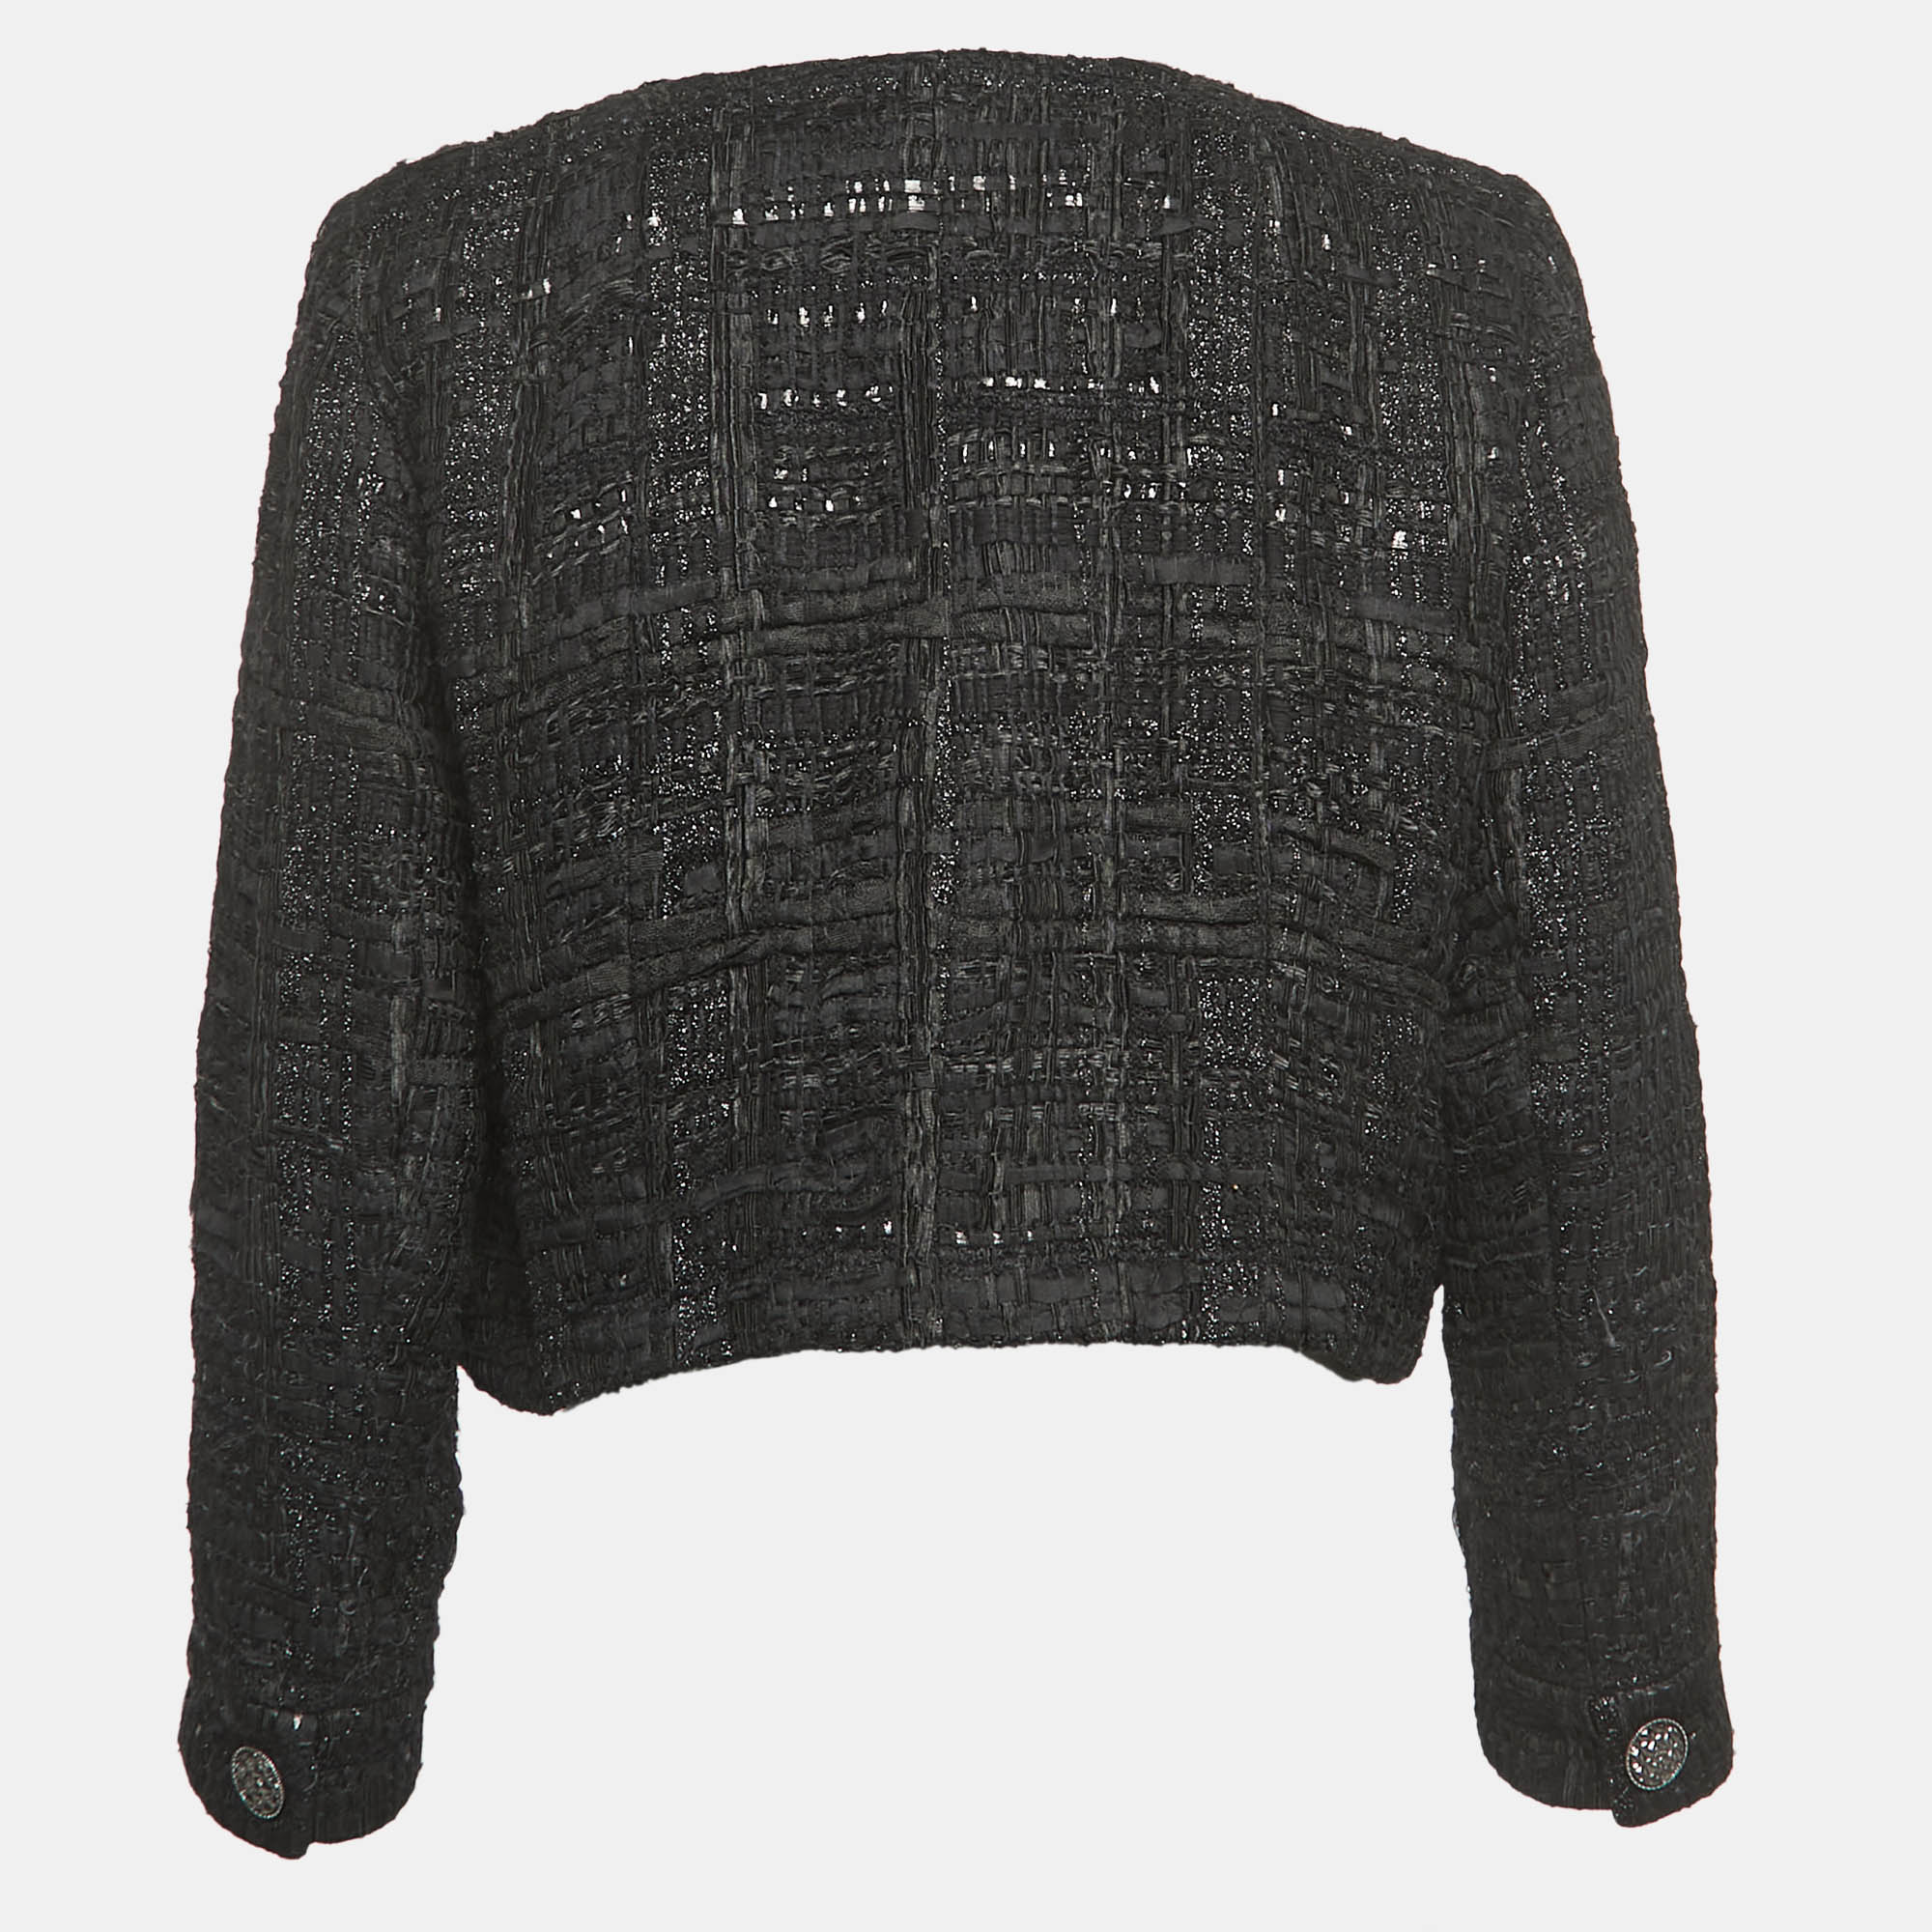 

Chanel Black/Metallic Dubai Tweed Jacket